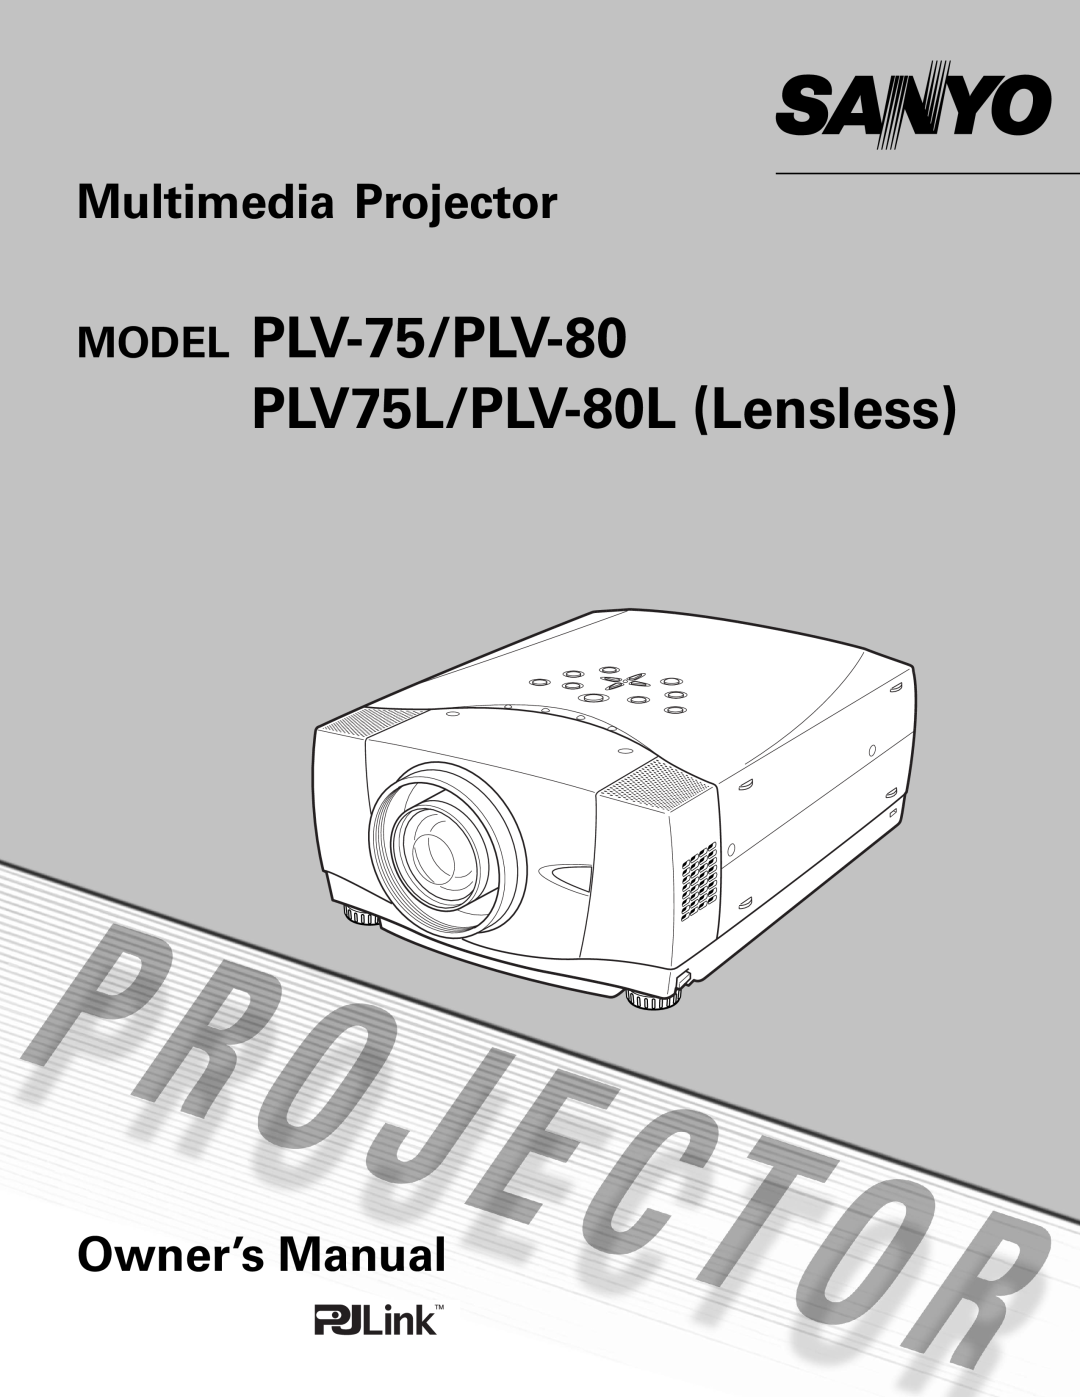 Sanyo owner manual MODEL PLV-75/PLV-80 PLV75L/PLV-80L Lensless, Multimedia Projector, Owner’s Manual 